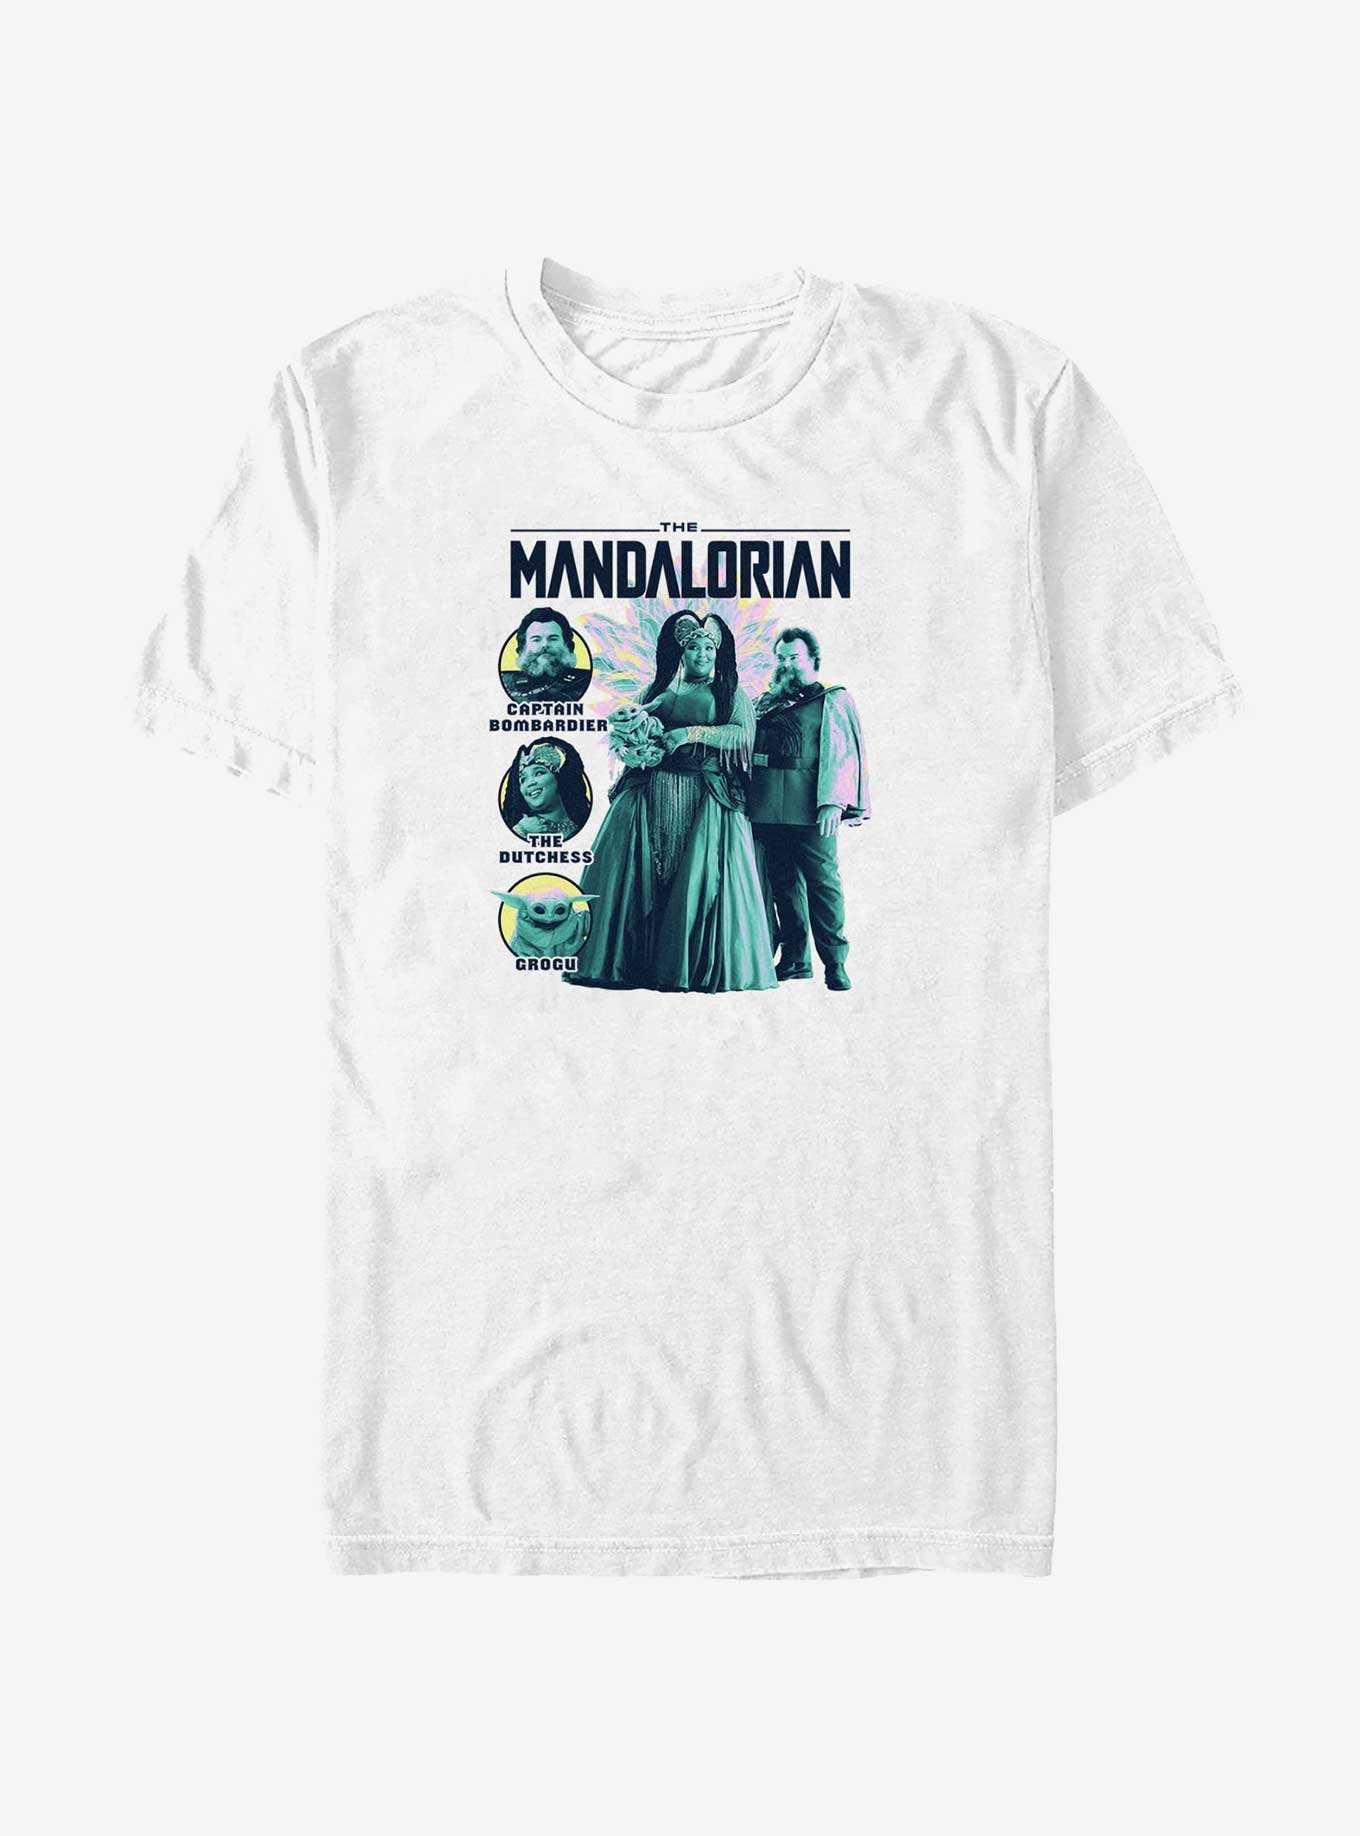 Star Wars The Mandalorian The Dutchess Captain Bombardier & Grogu Big & Tall T-Shirt, , hi-res